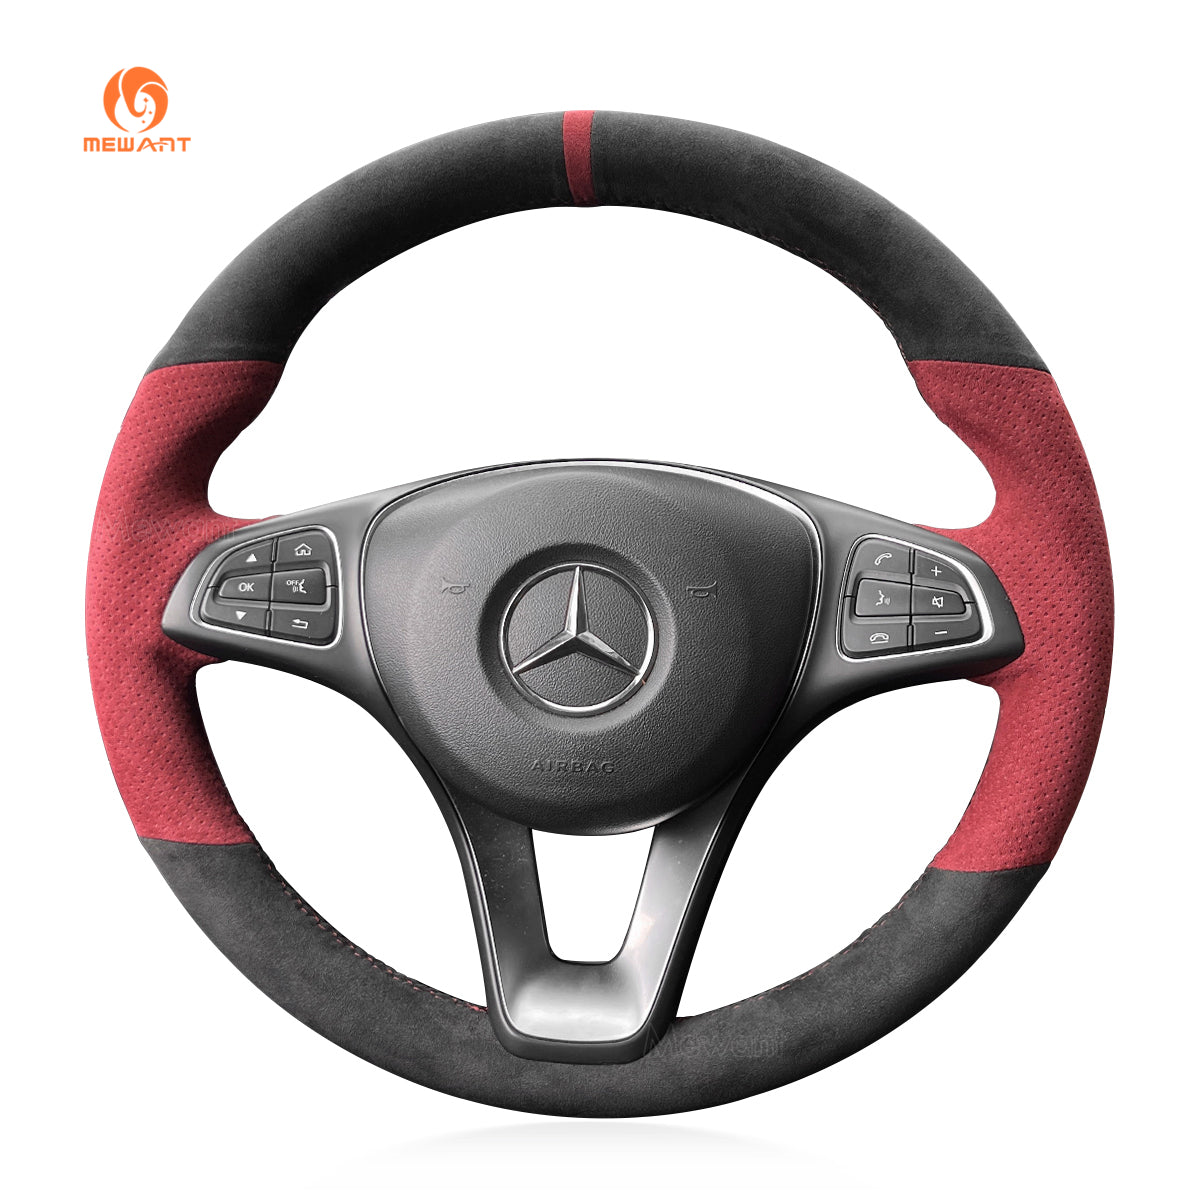 MEWANT Hand Stitch Alcantara Car Steering Wheel Cover for Mercedes